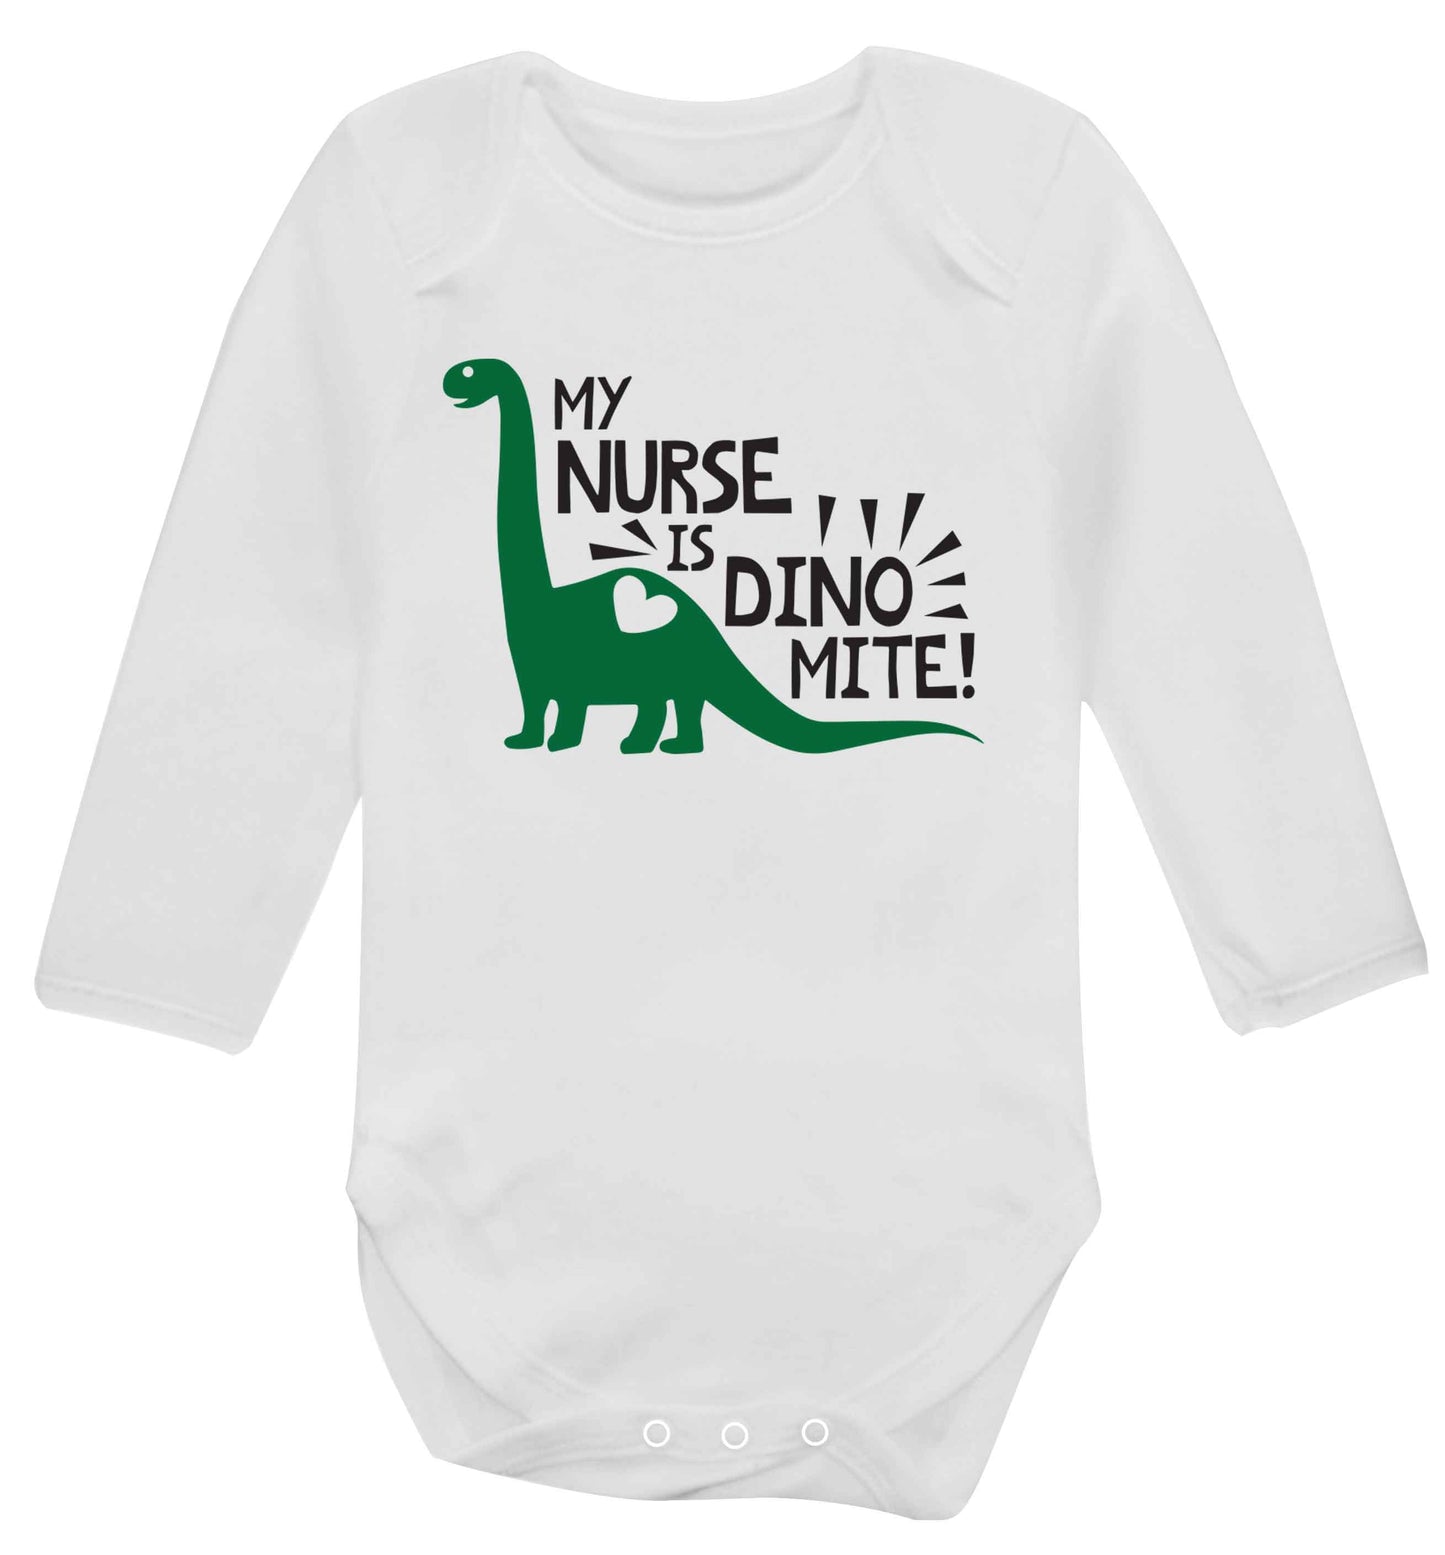 My nurse is dinomite! Baby Vest long sleeved white 6-12 months